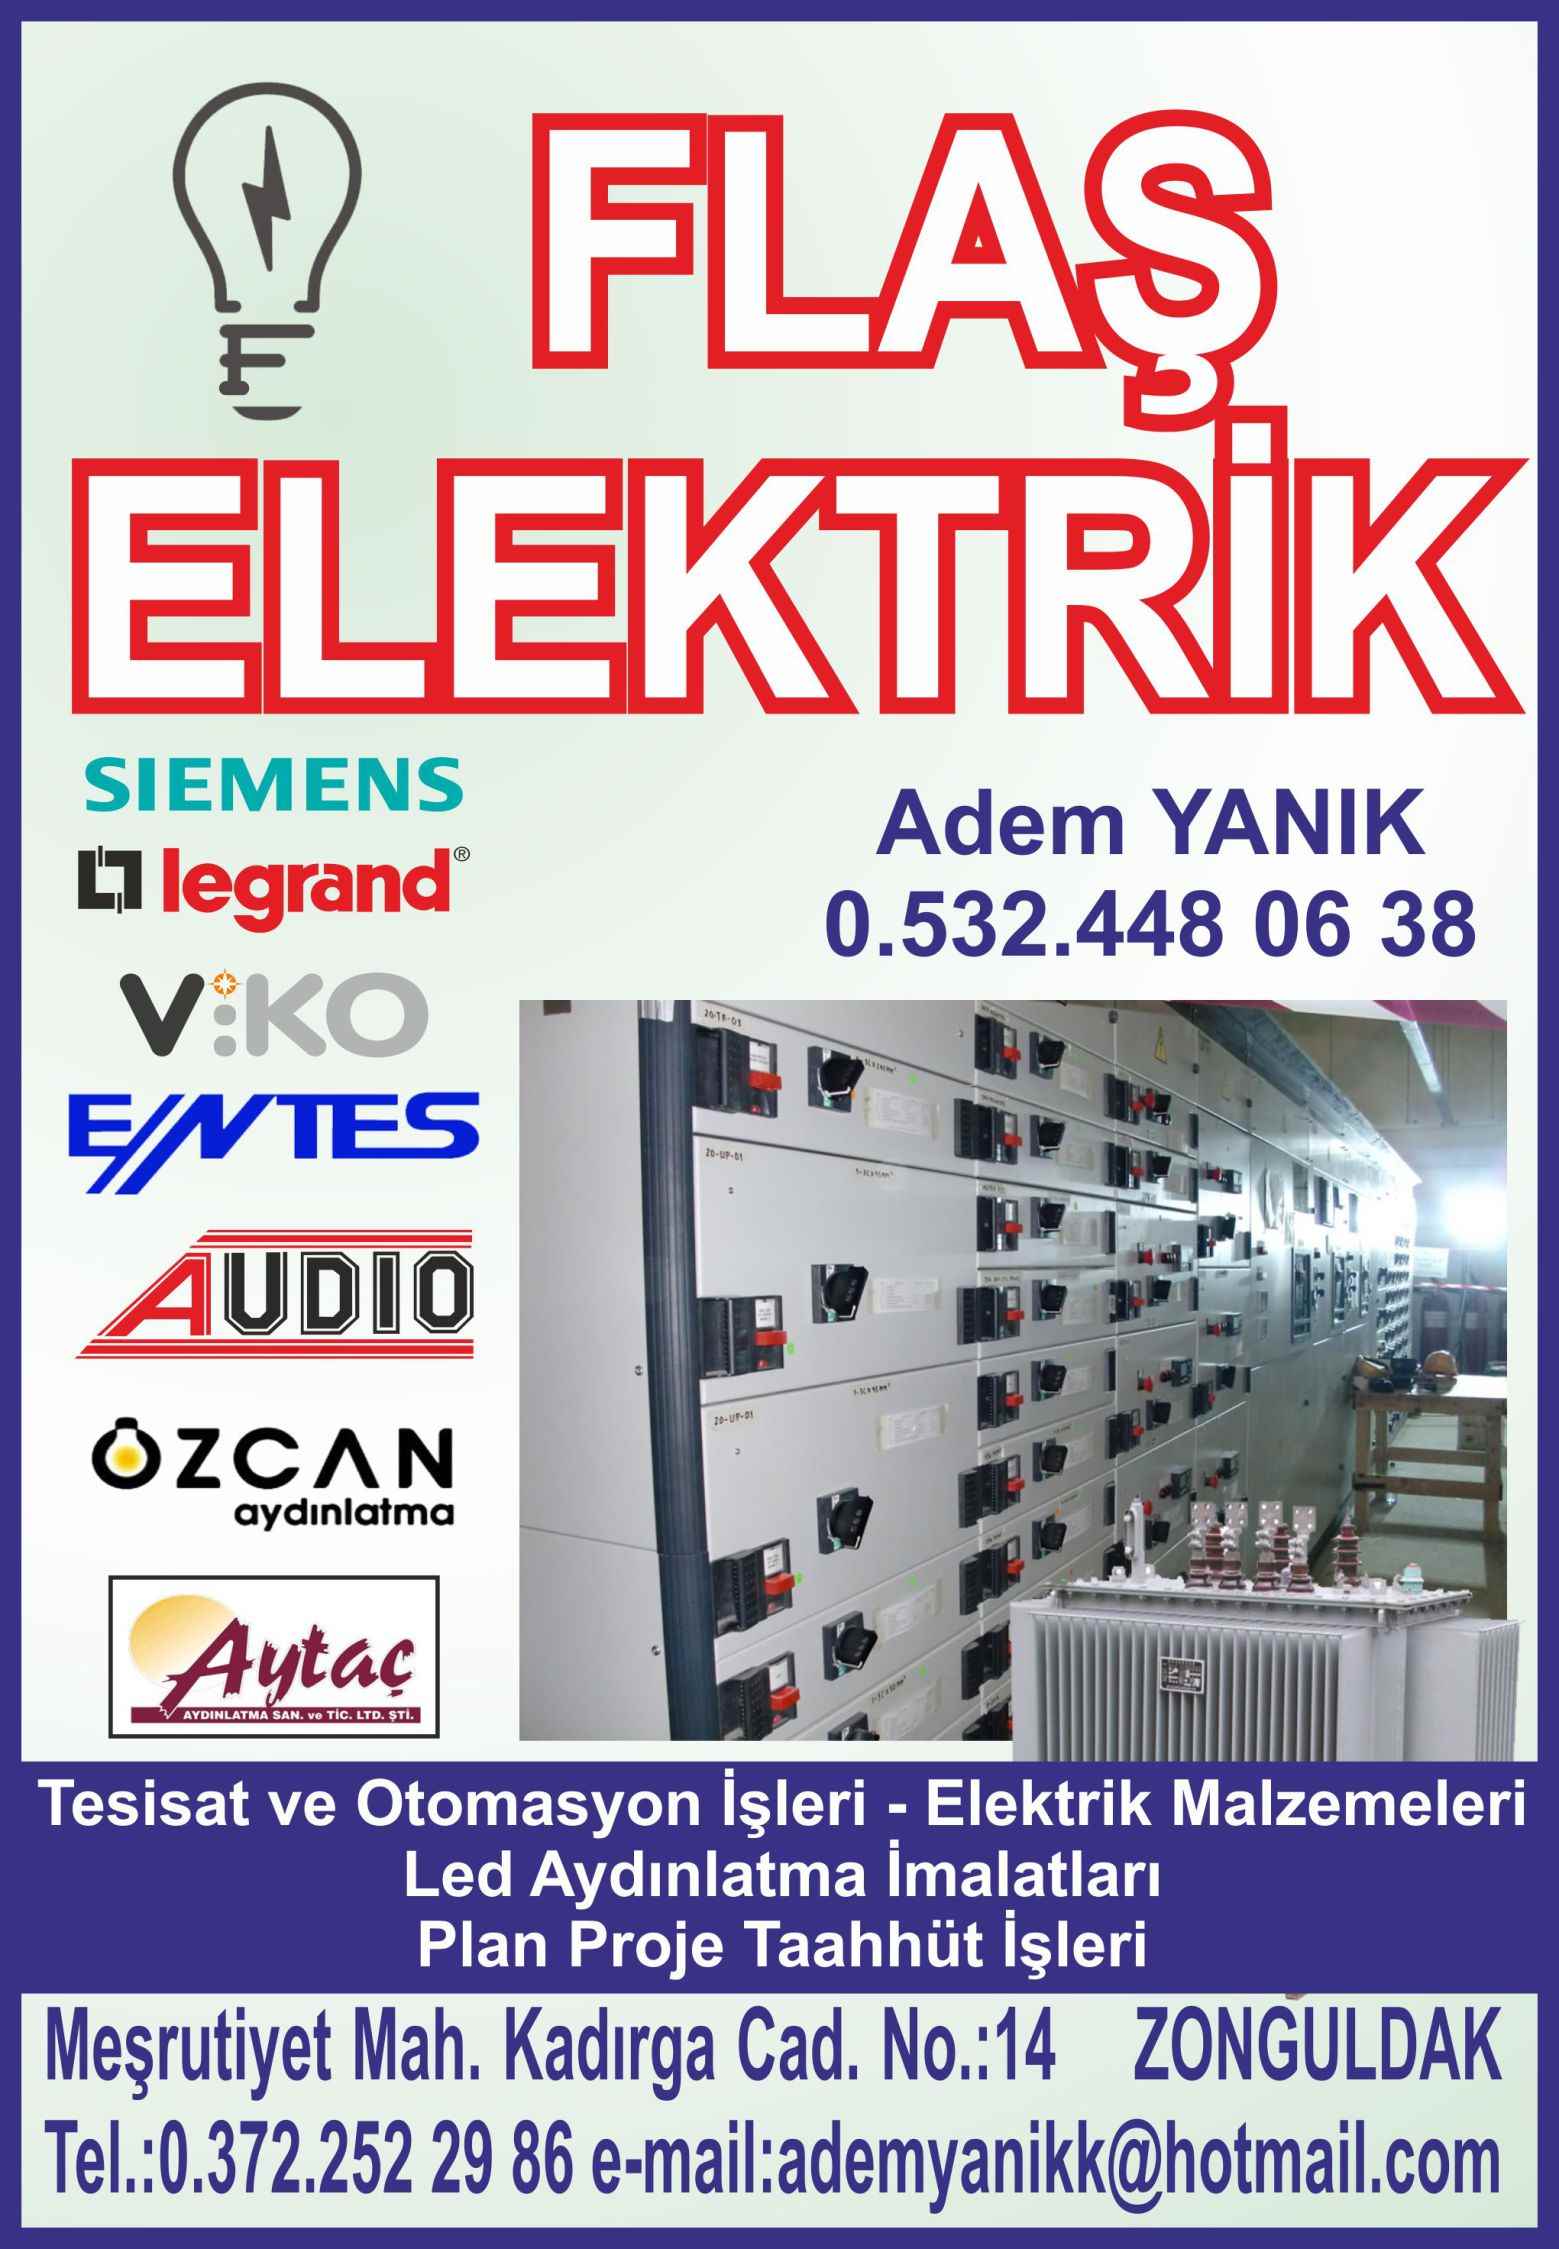 Flaş Elektrik Zonguldak